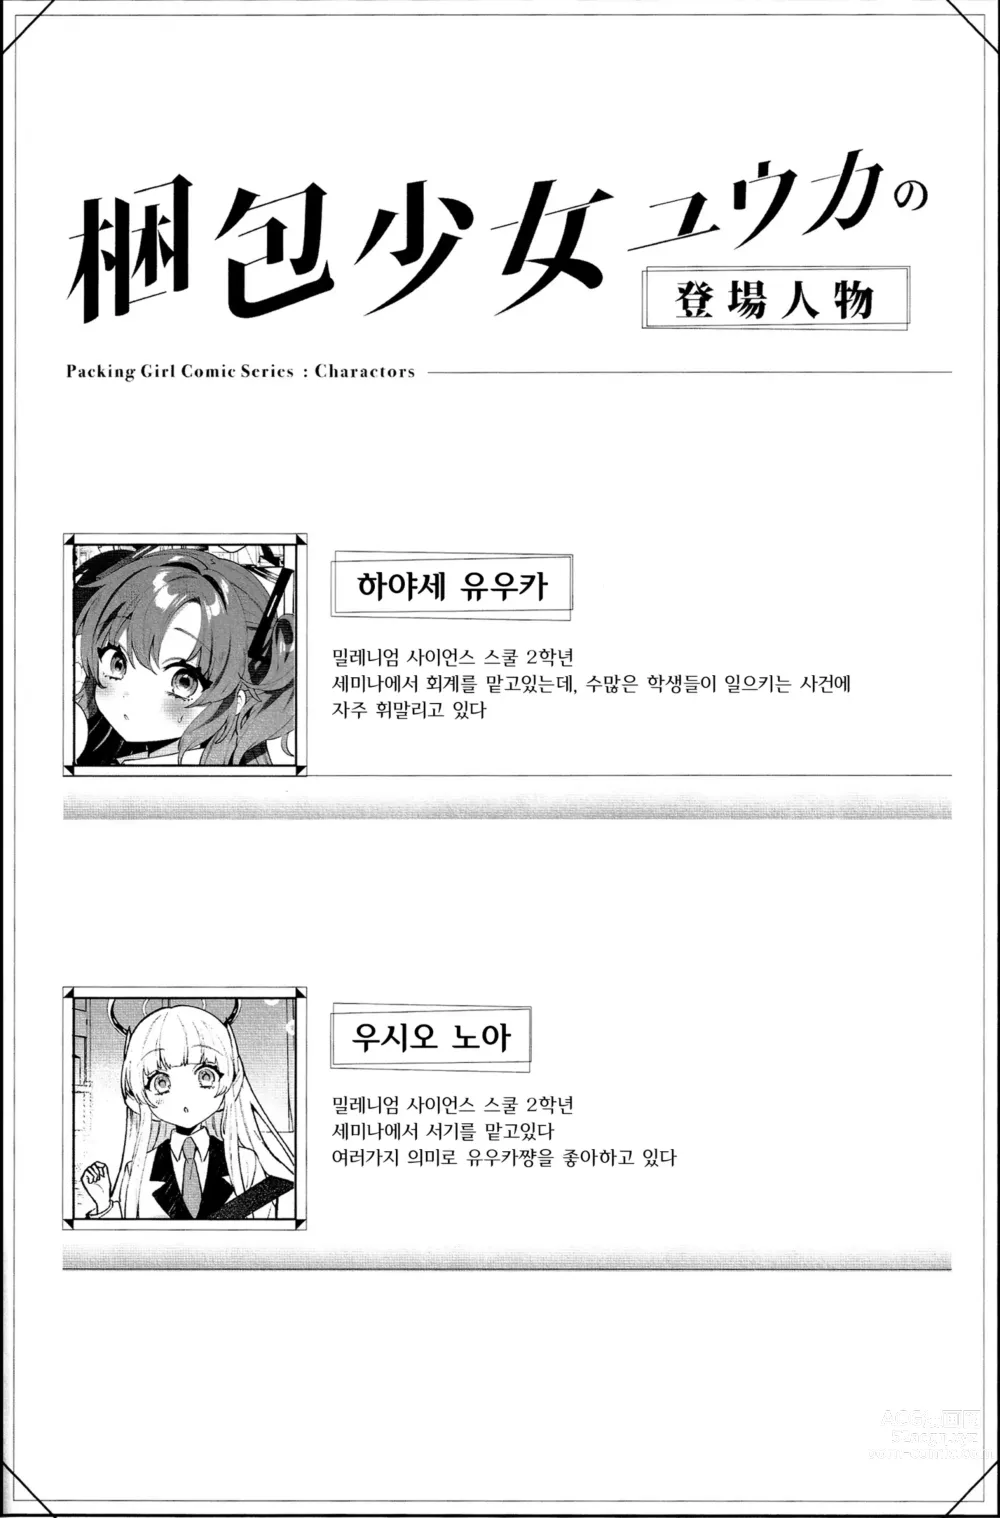 Page 2 of doujinshi 포장 소녀 유우카